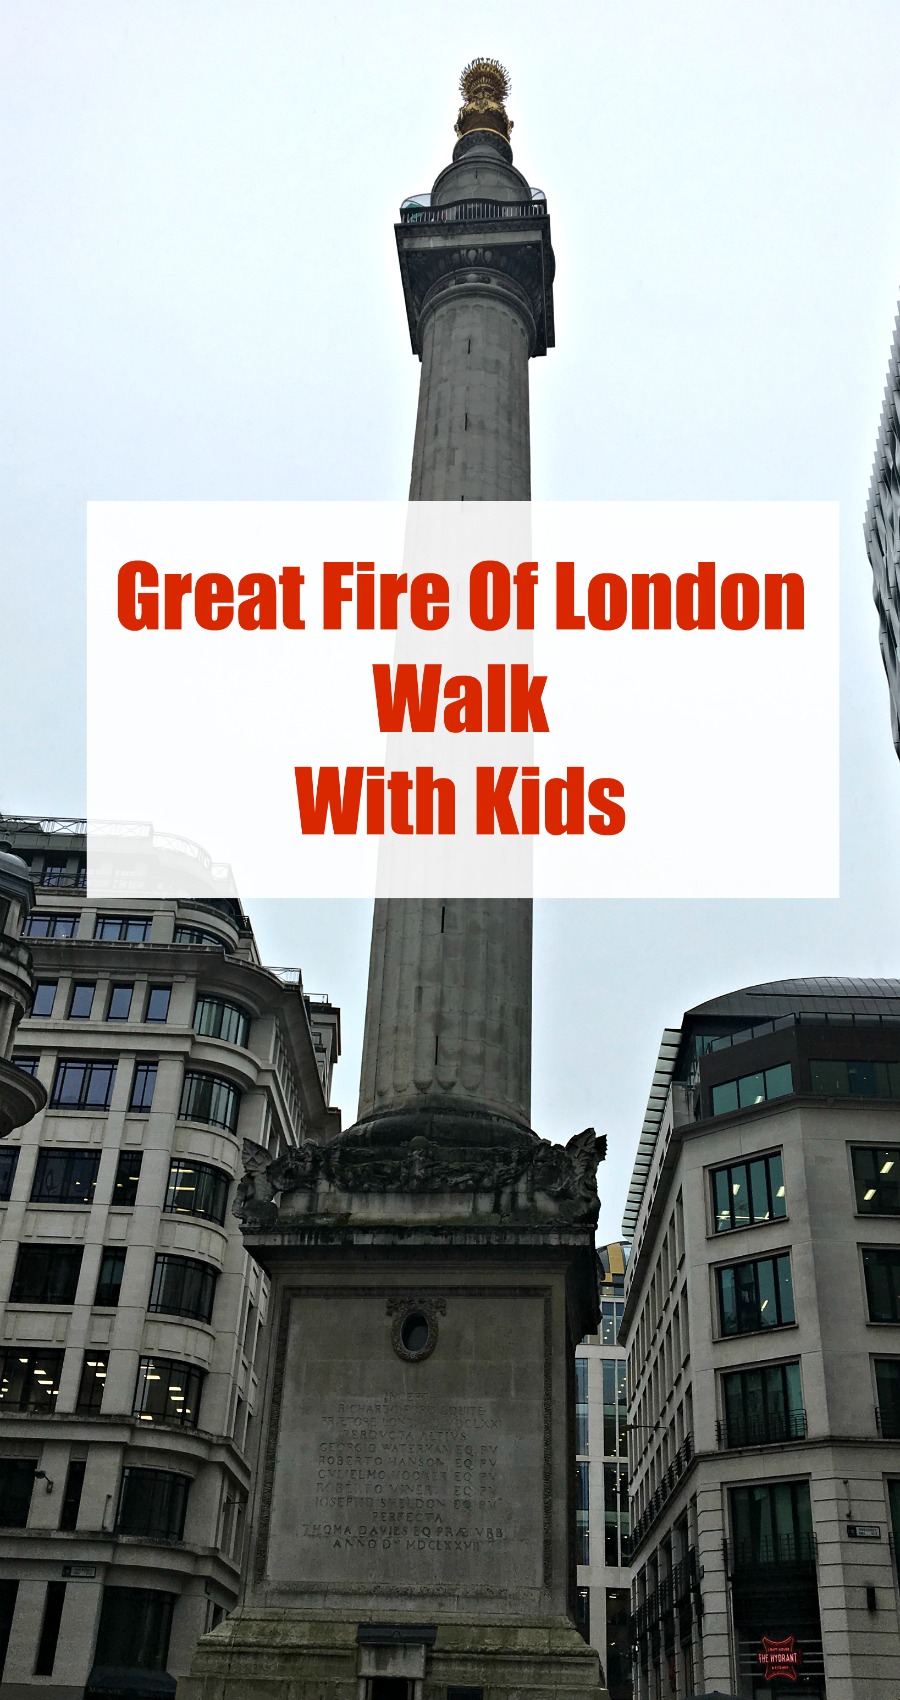 Great Fire of London walk with kids, London KS1 history